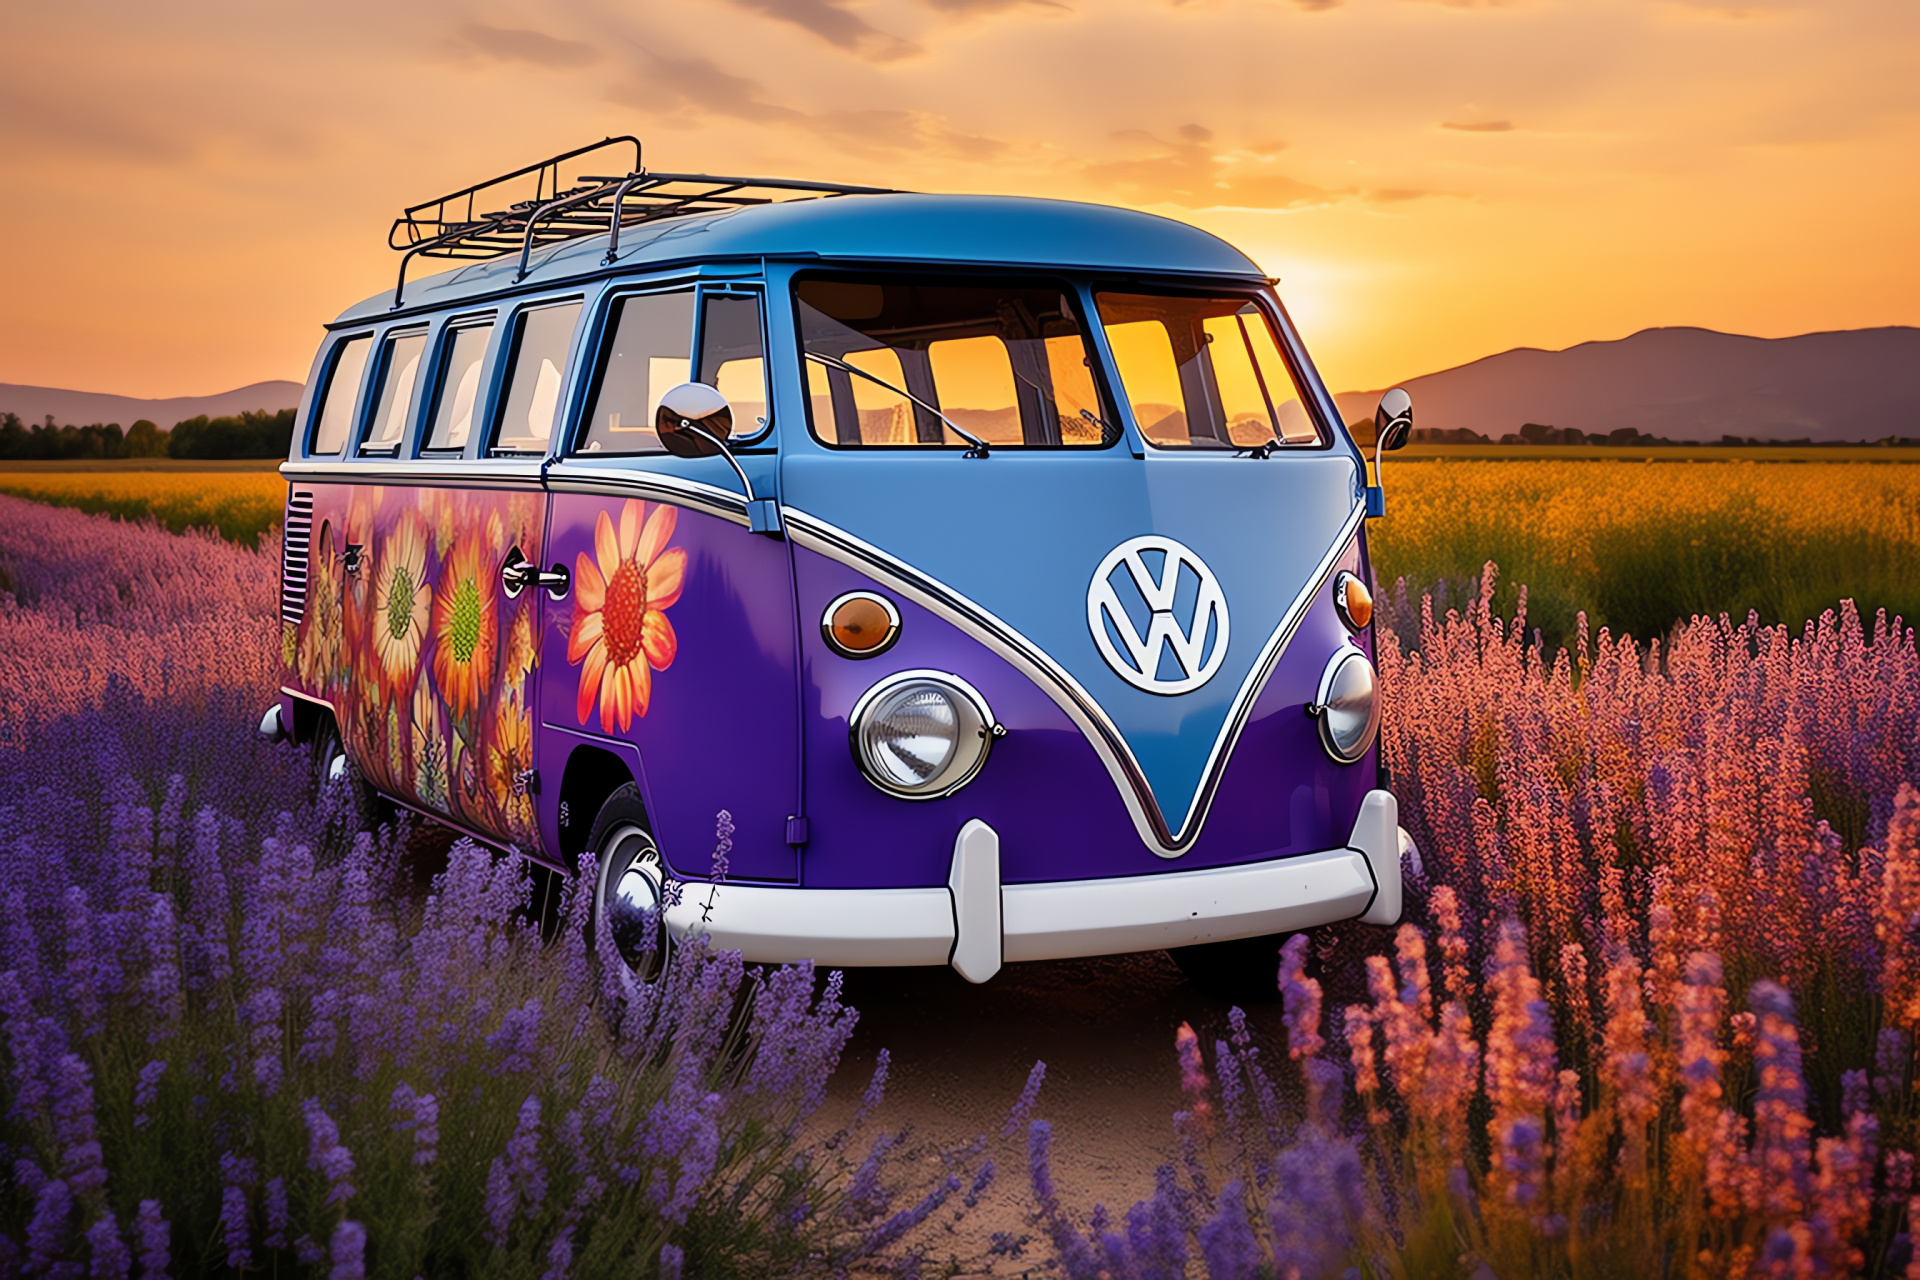 VW Bus through Provence, floral detailing, fragrance of lavender, nature's hues, boho spirit, sunlit aura, HD Desktop Wallpaper